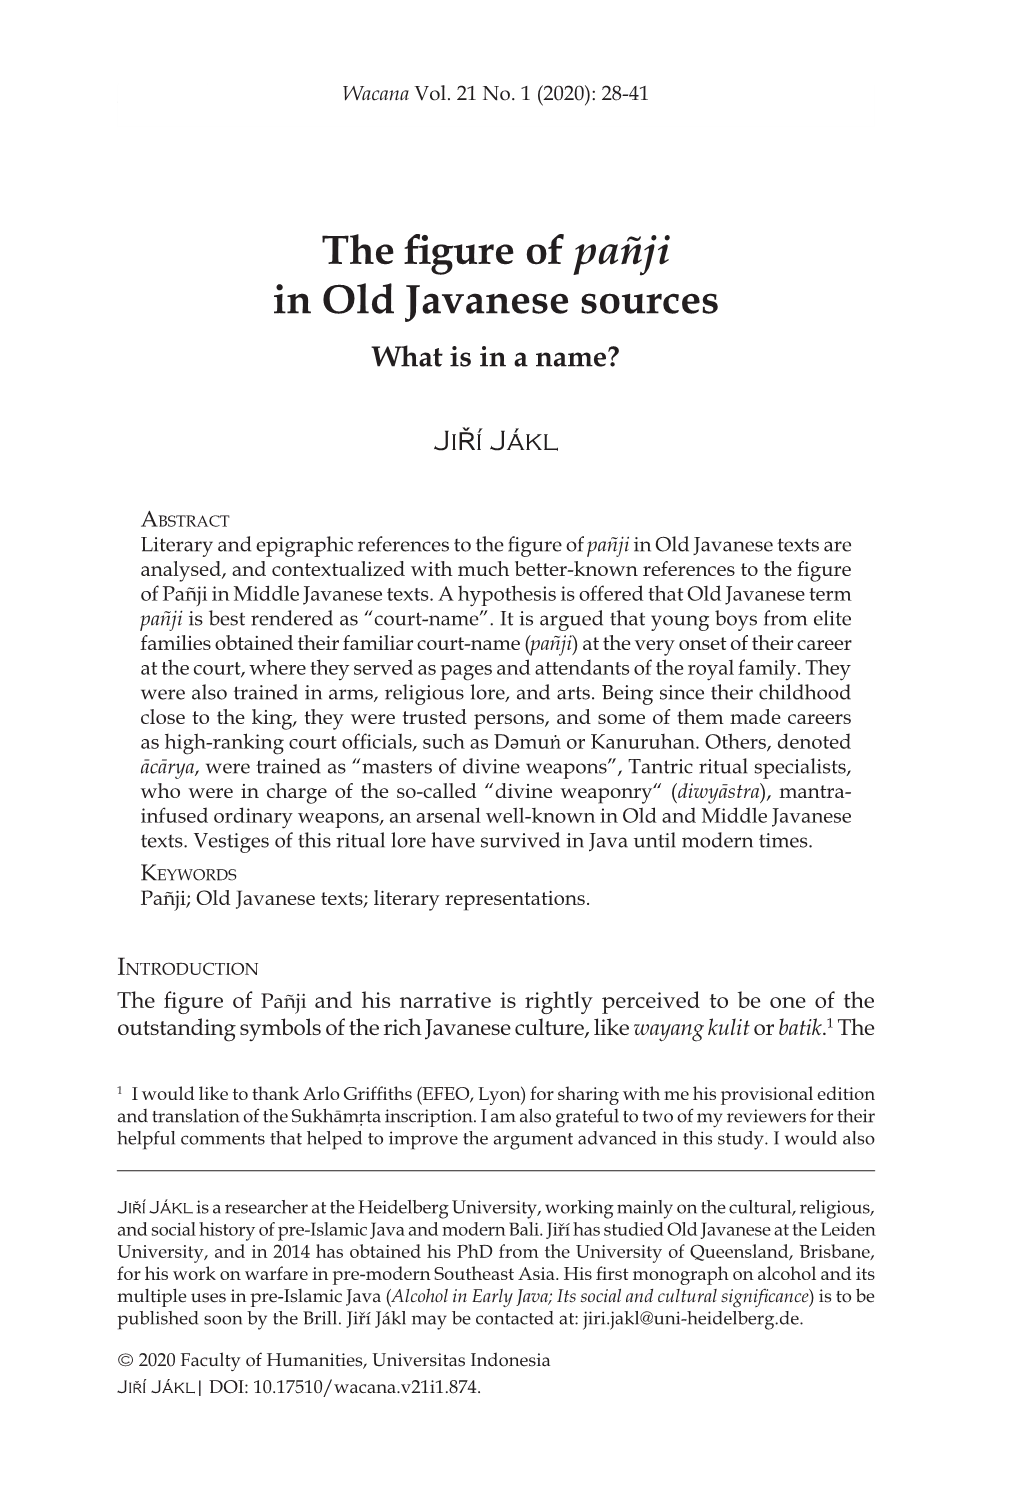 The Figure of Pañji in Old Javanese Sources 29